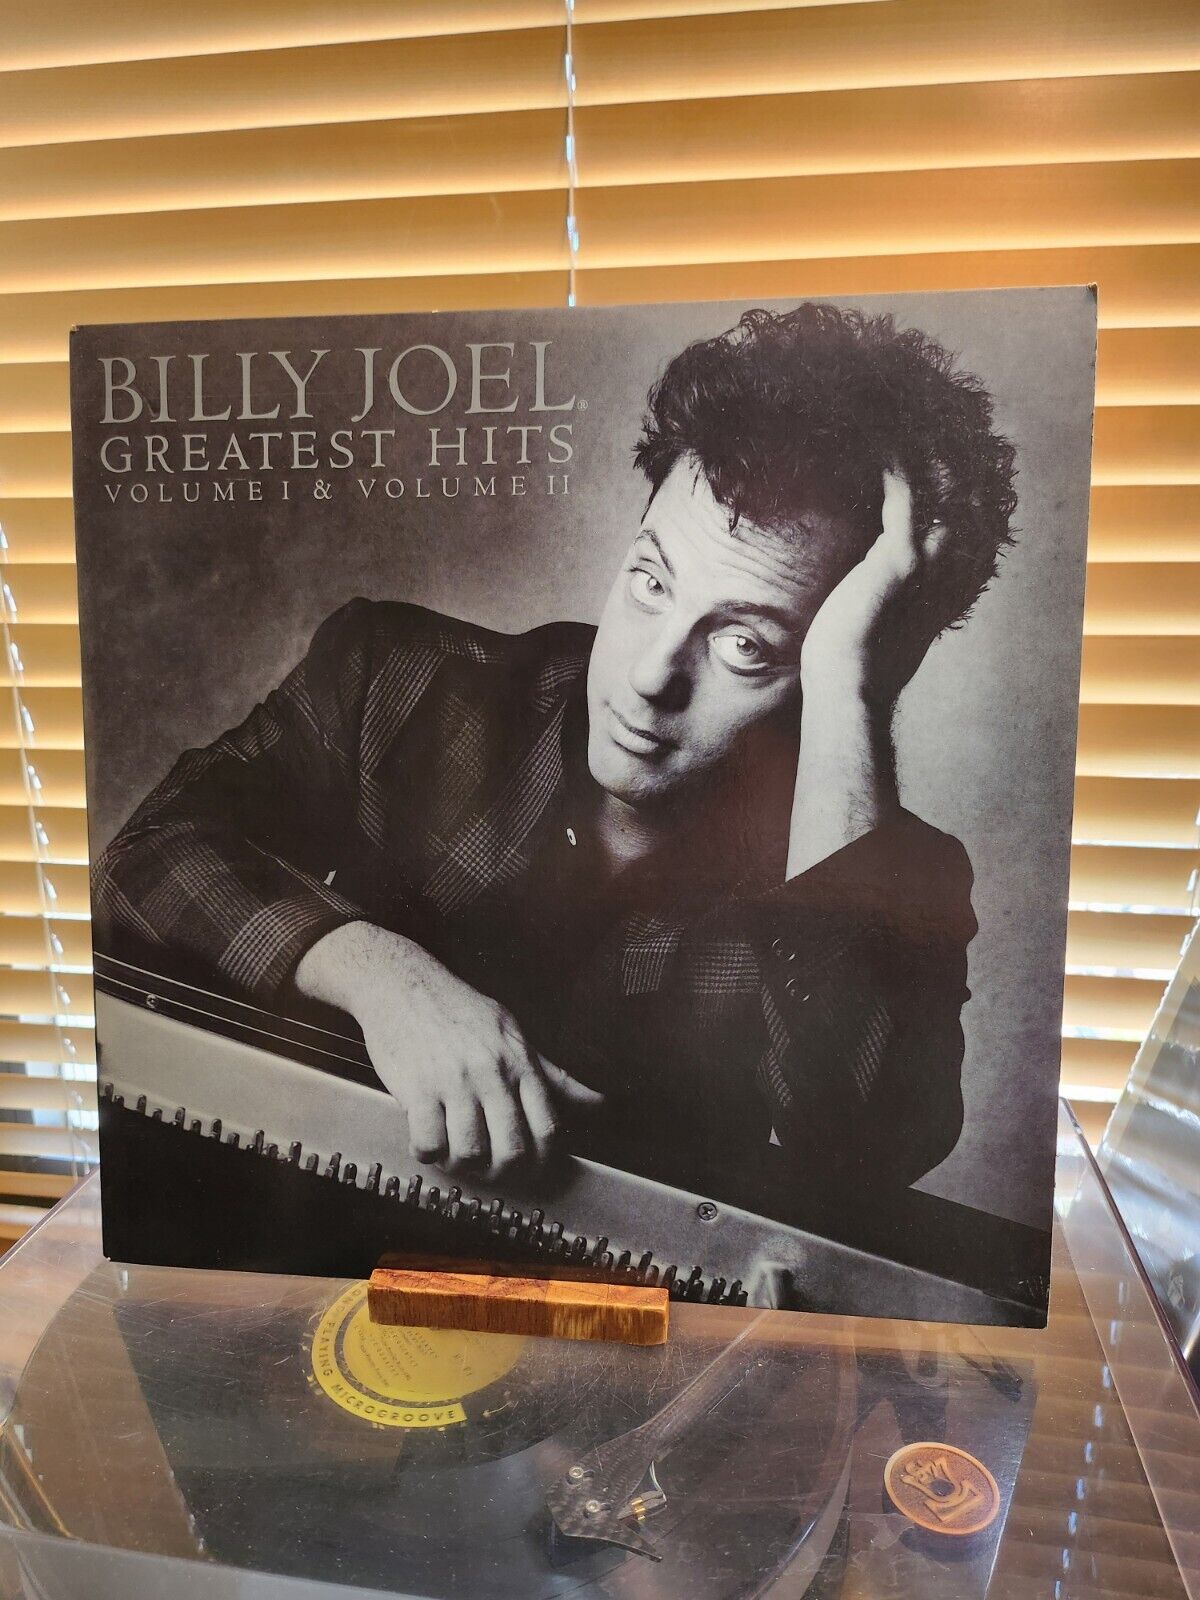 Billy Joel, Greatest Hits Vol 1 & Vol 2, 1985 Columbia Stereo, C2-40121, VG+/VG+